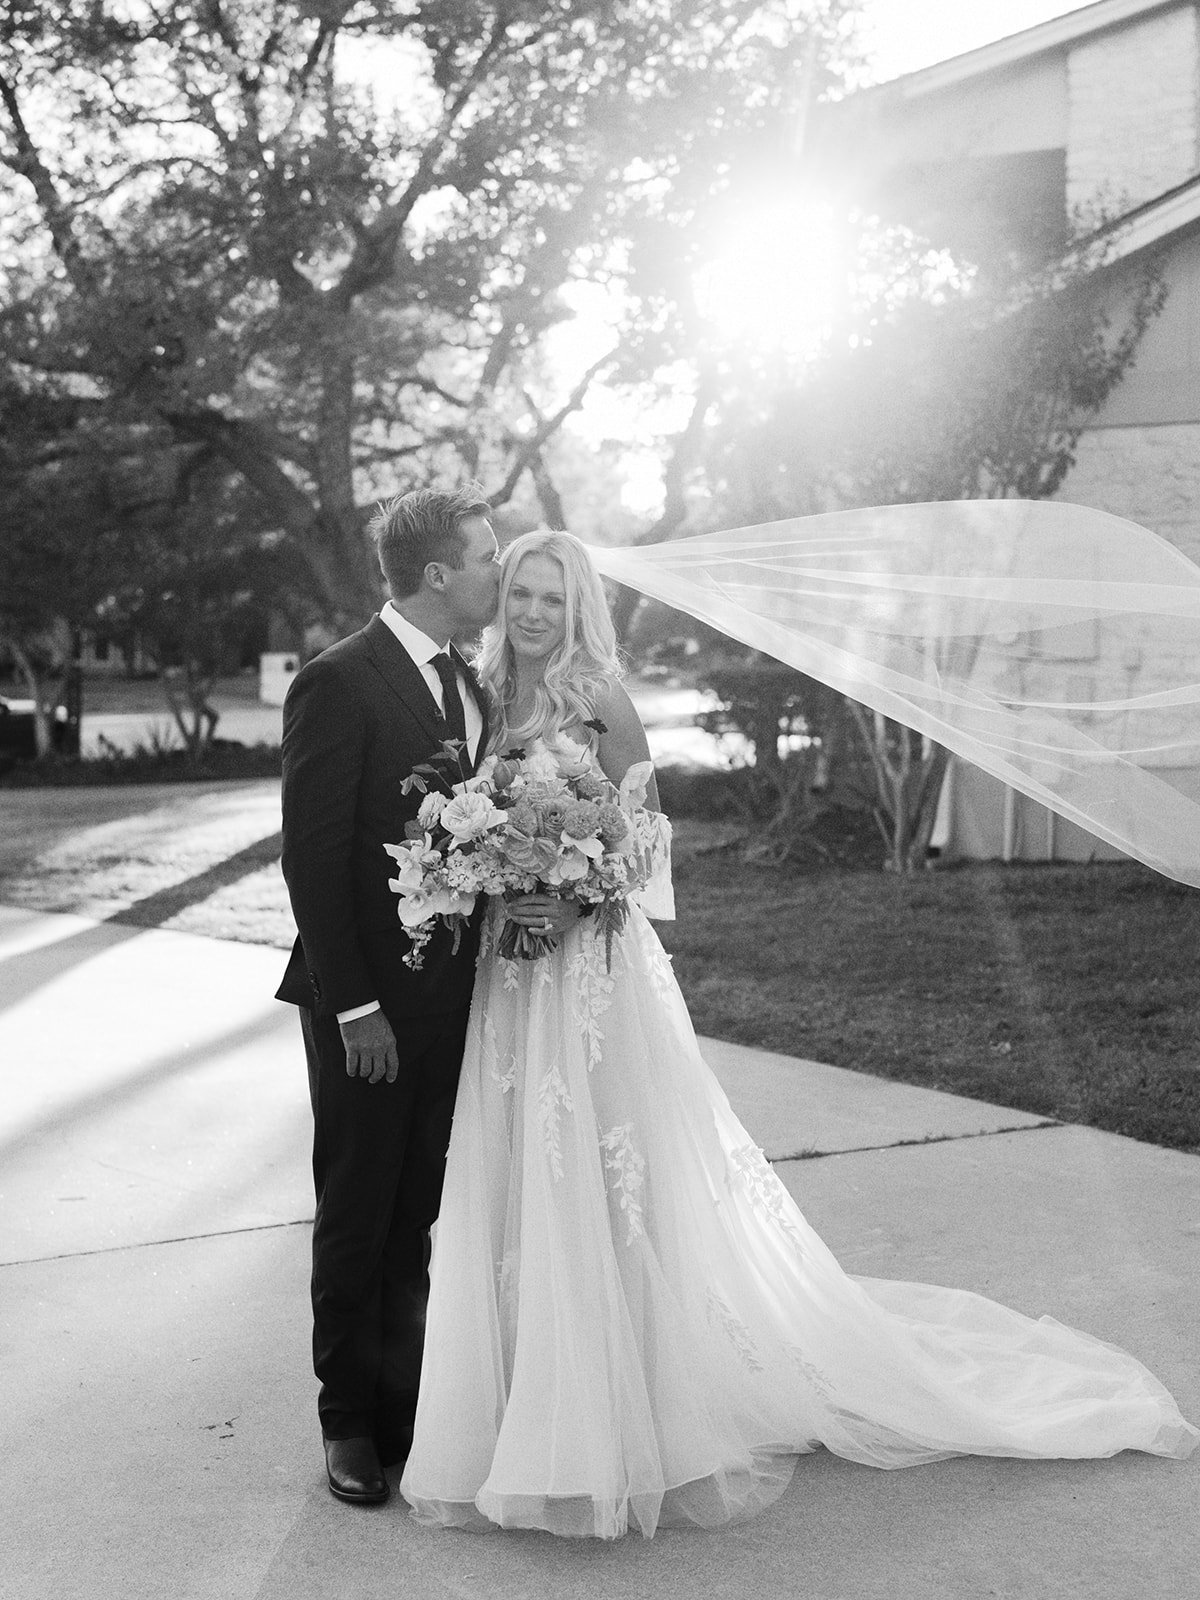 Best-Austin-Wedding-Photographers-Elopement-Film-35mm-Asheville-Santa-Barbara-Backyard-62.jpg